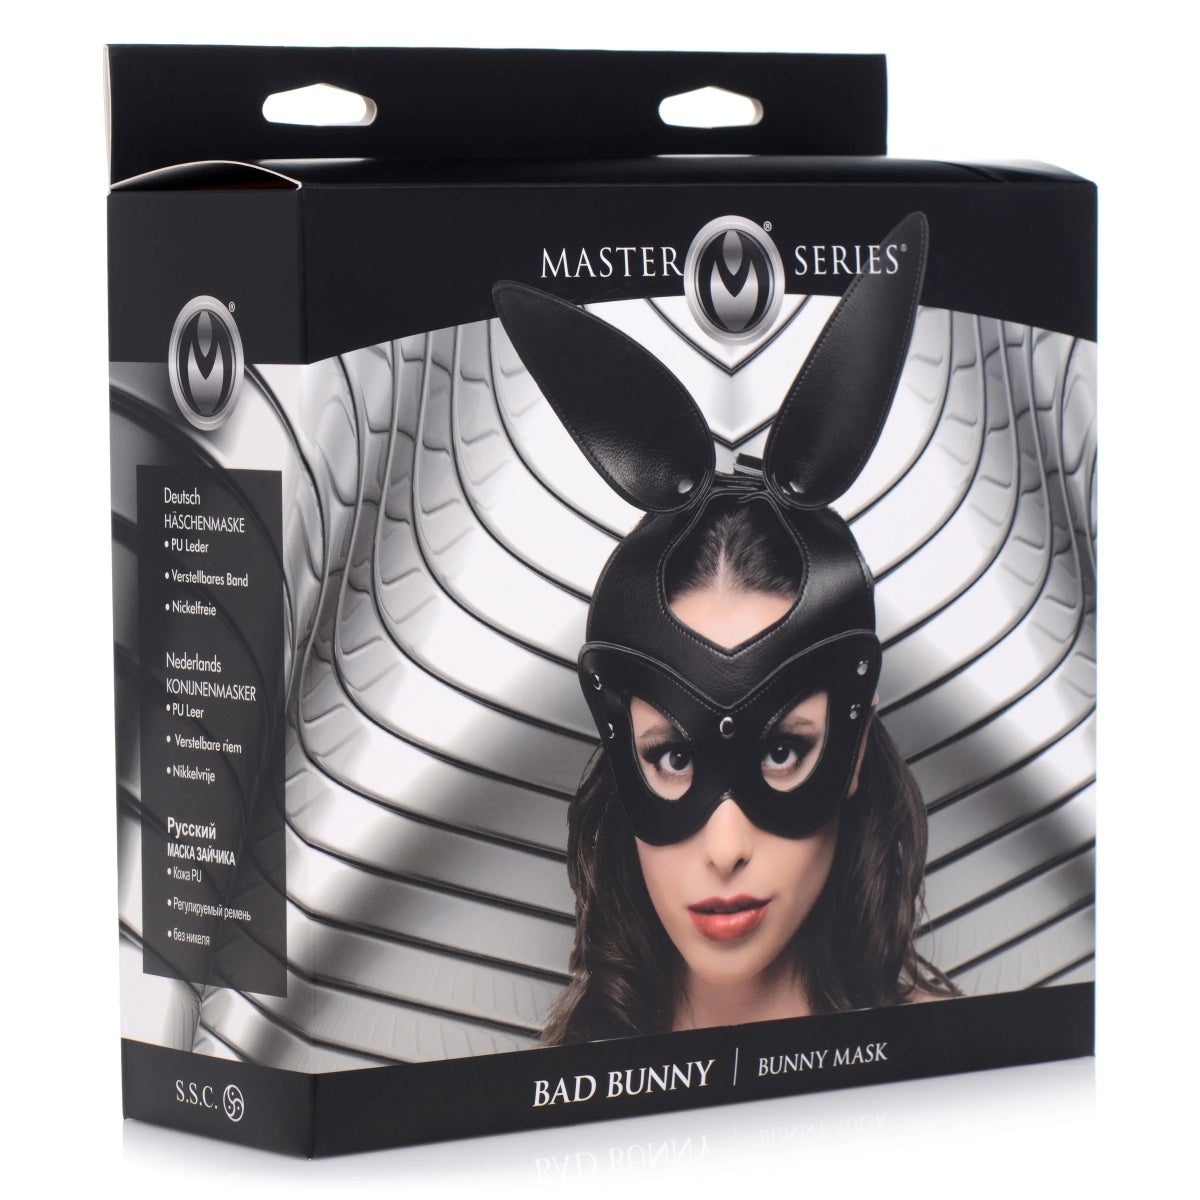 Master Series Bad Bunny Mask Black